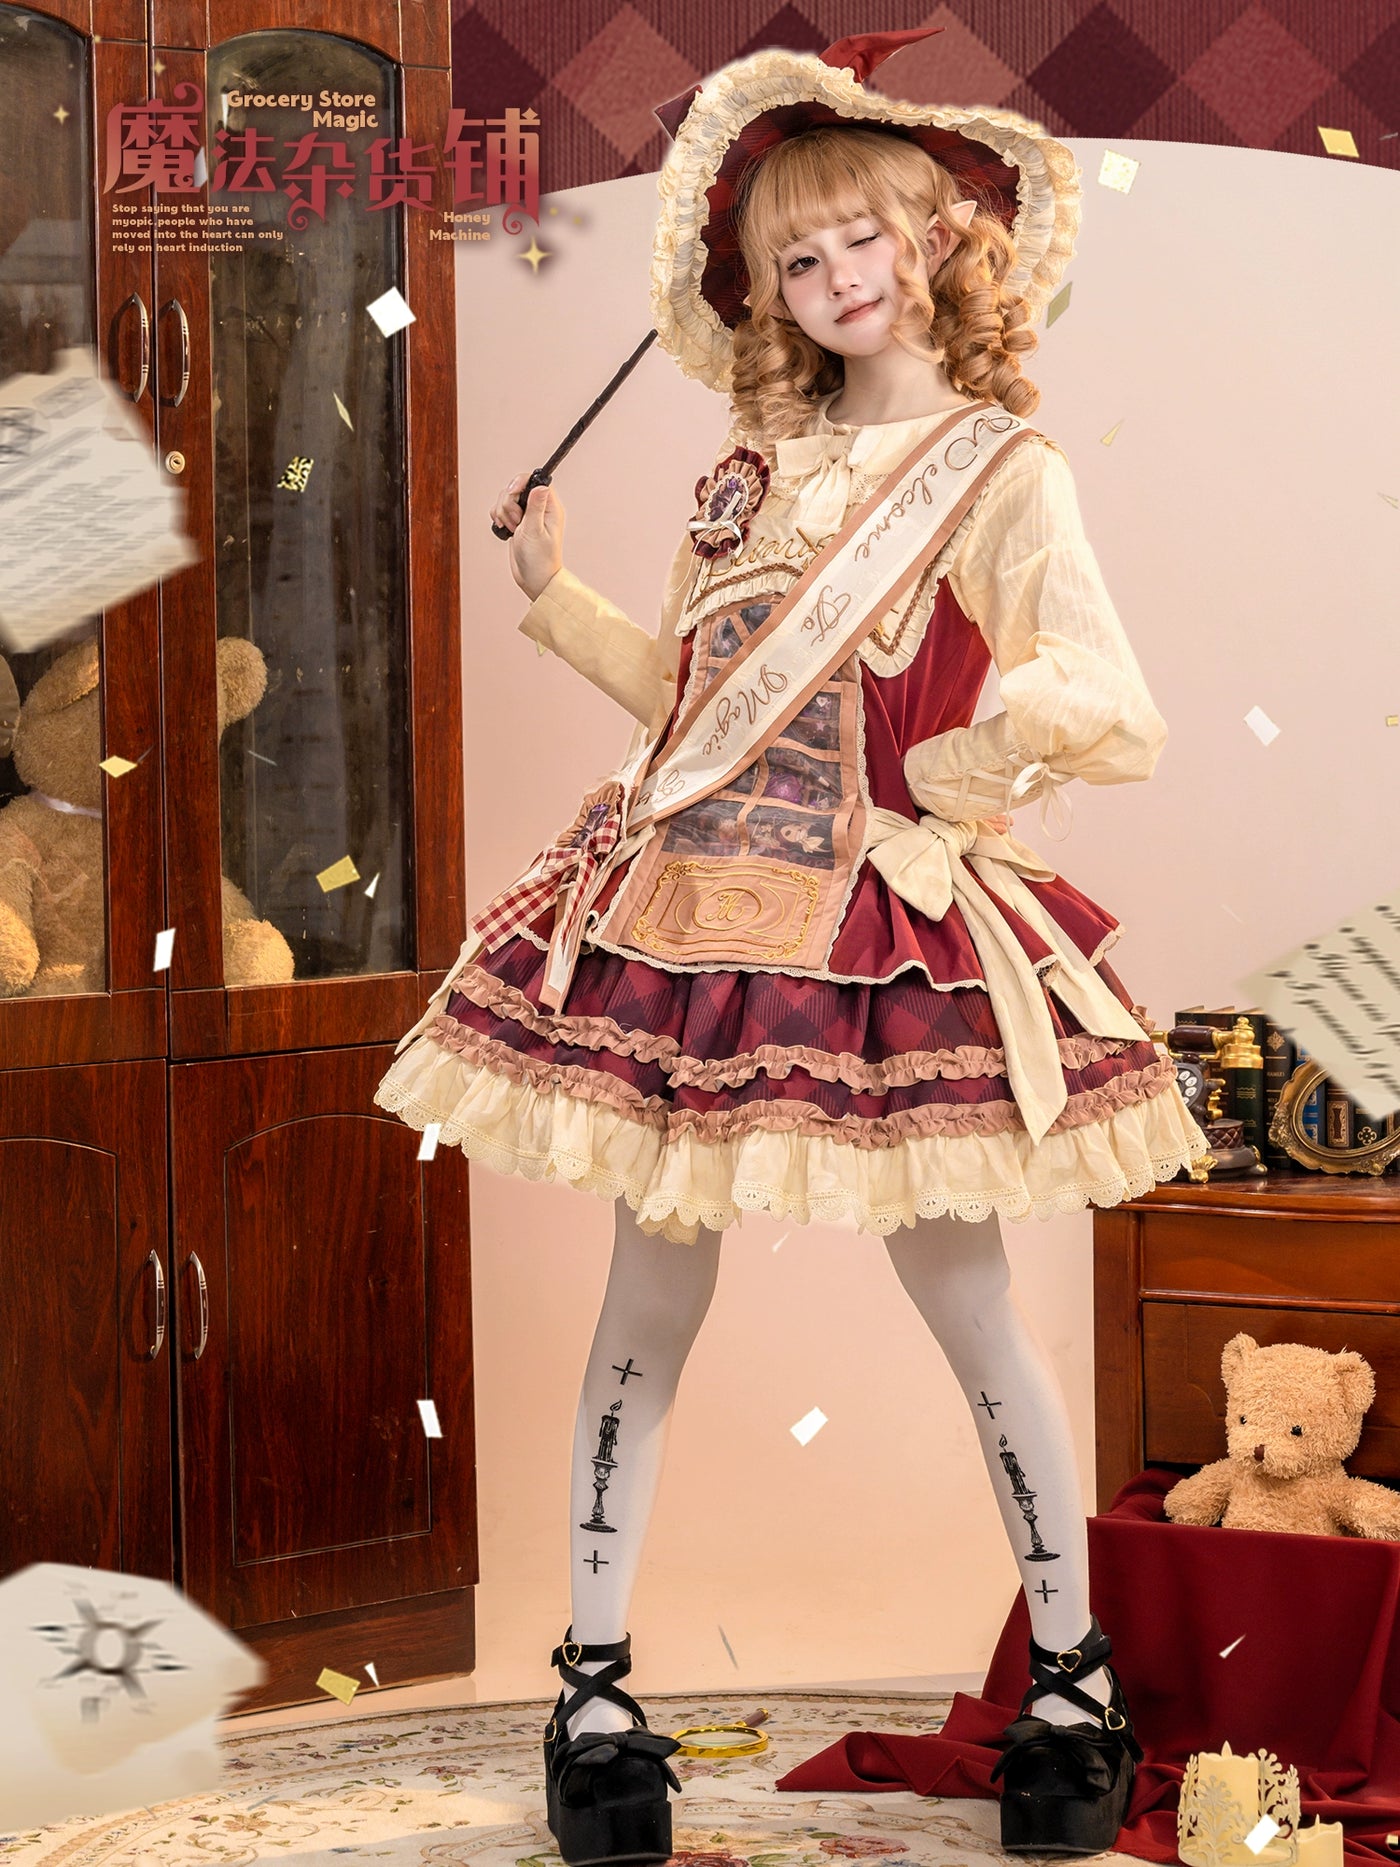 Sweetheart Vending Machine~Magic Grocery Store~Sweet Lolita Salopette Dress and Accessory Set 34736:492812